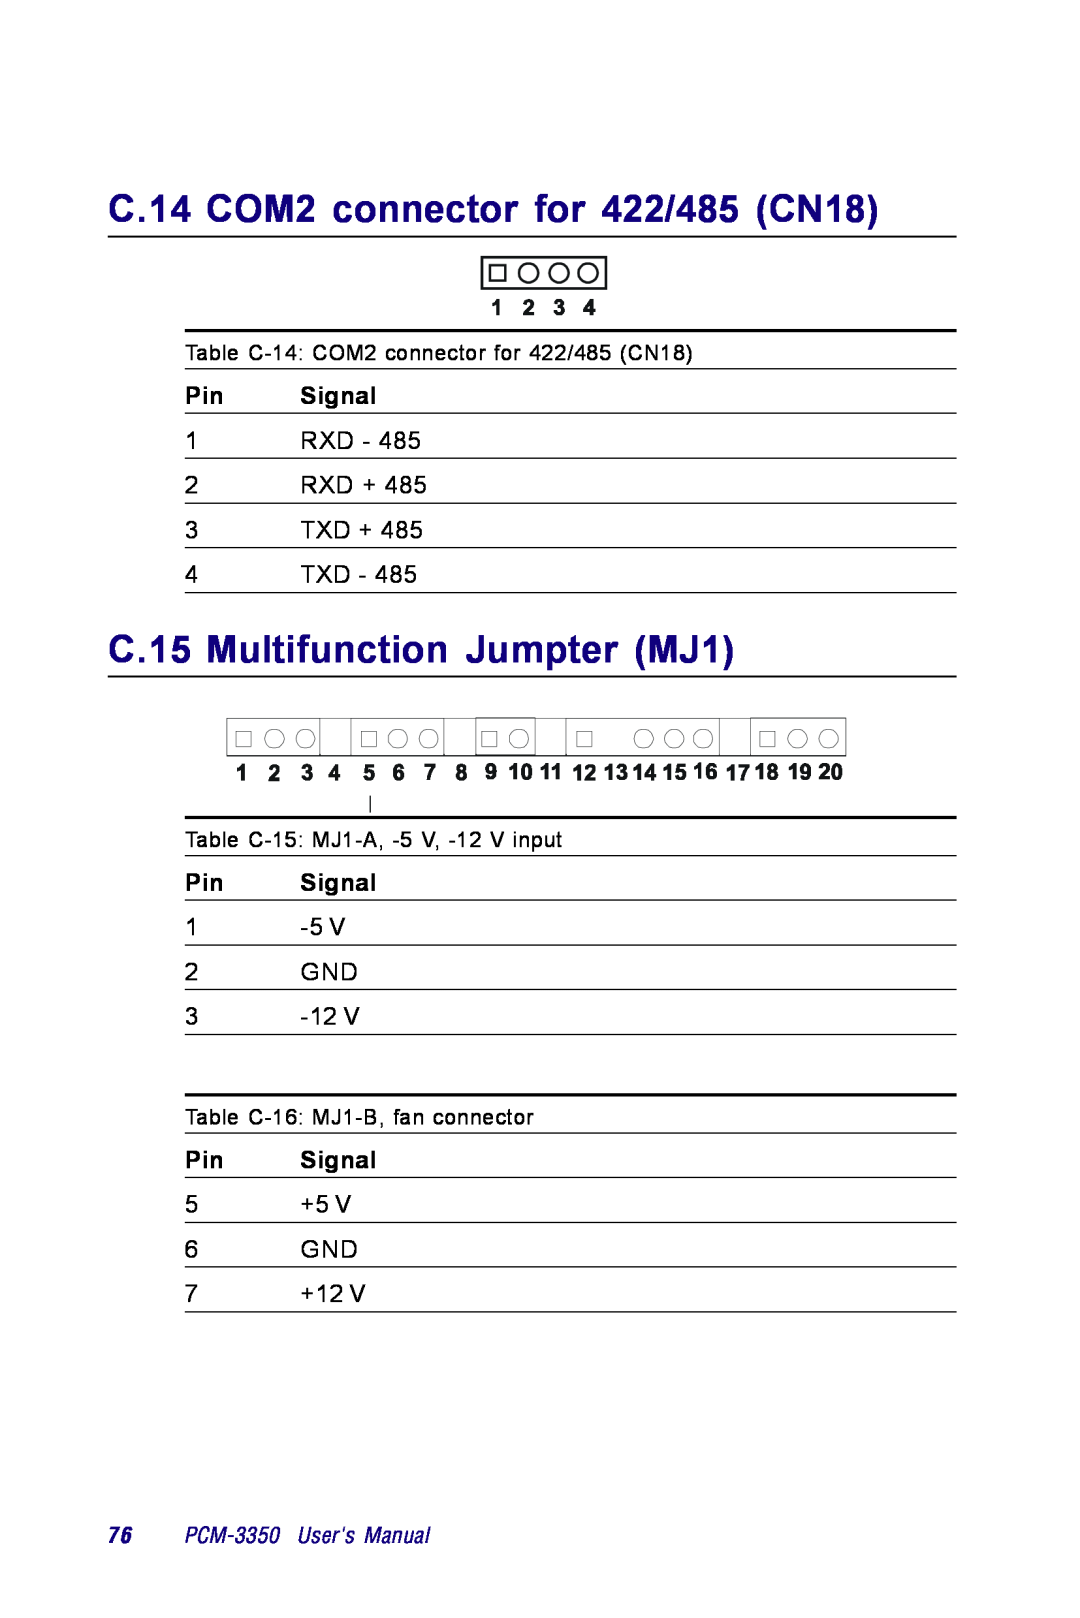 Advantech PCM-3350 Series user manual C.14 COM2 connector for 422/485 CN18, C.15 Multifunction Jumpter MJ1, Pin Signal 